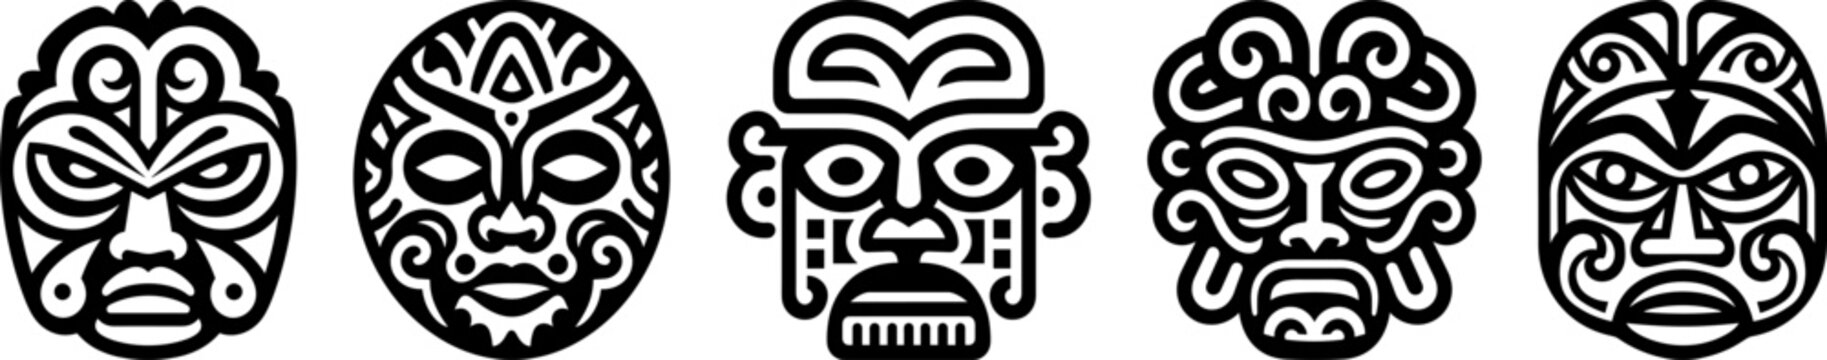 ancient tribal masks traditional logo vector